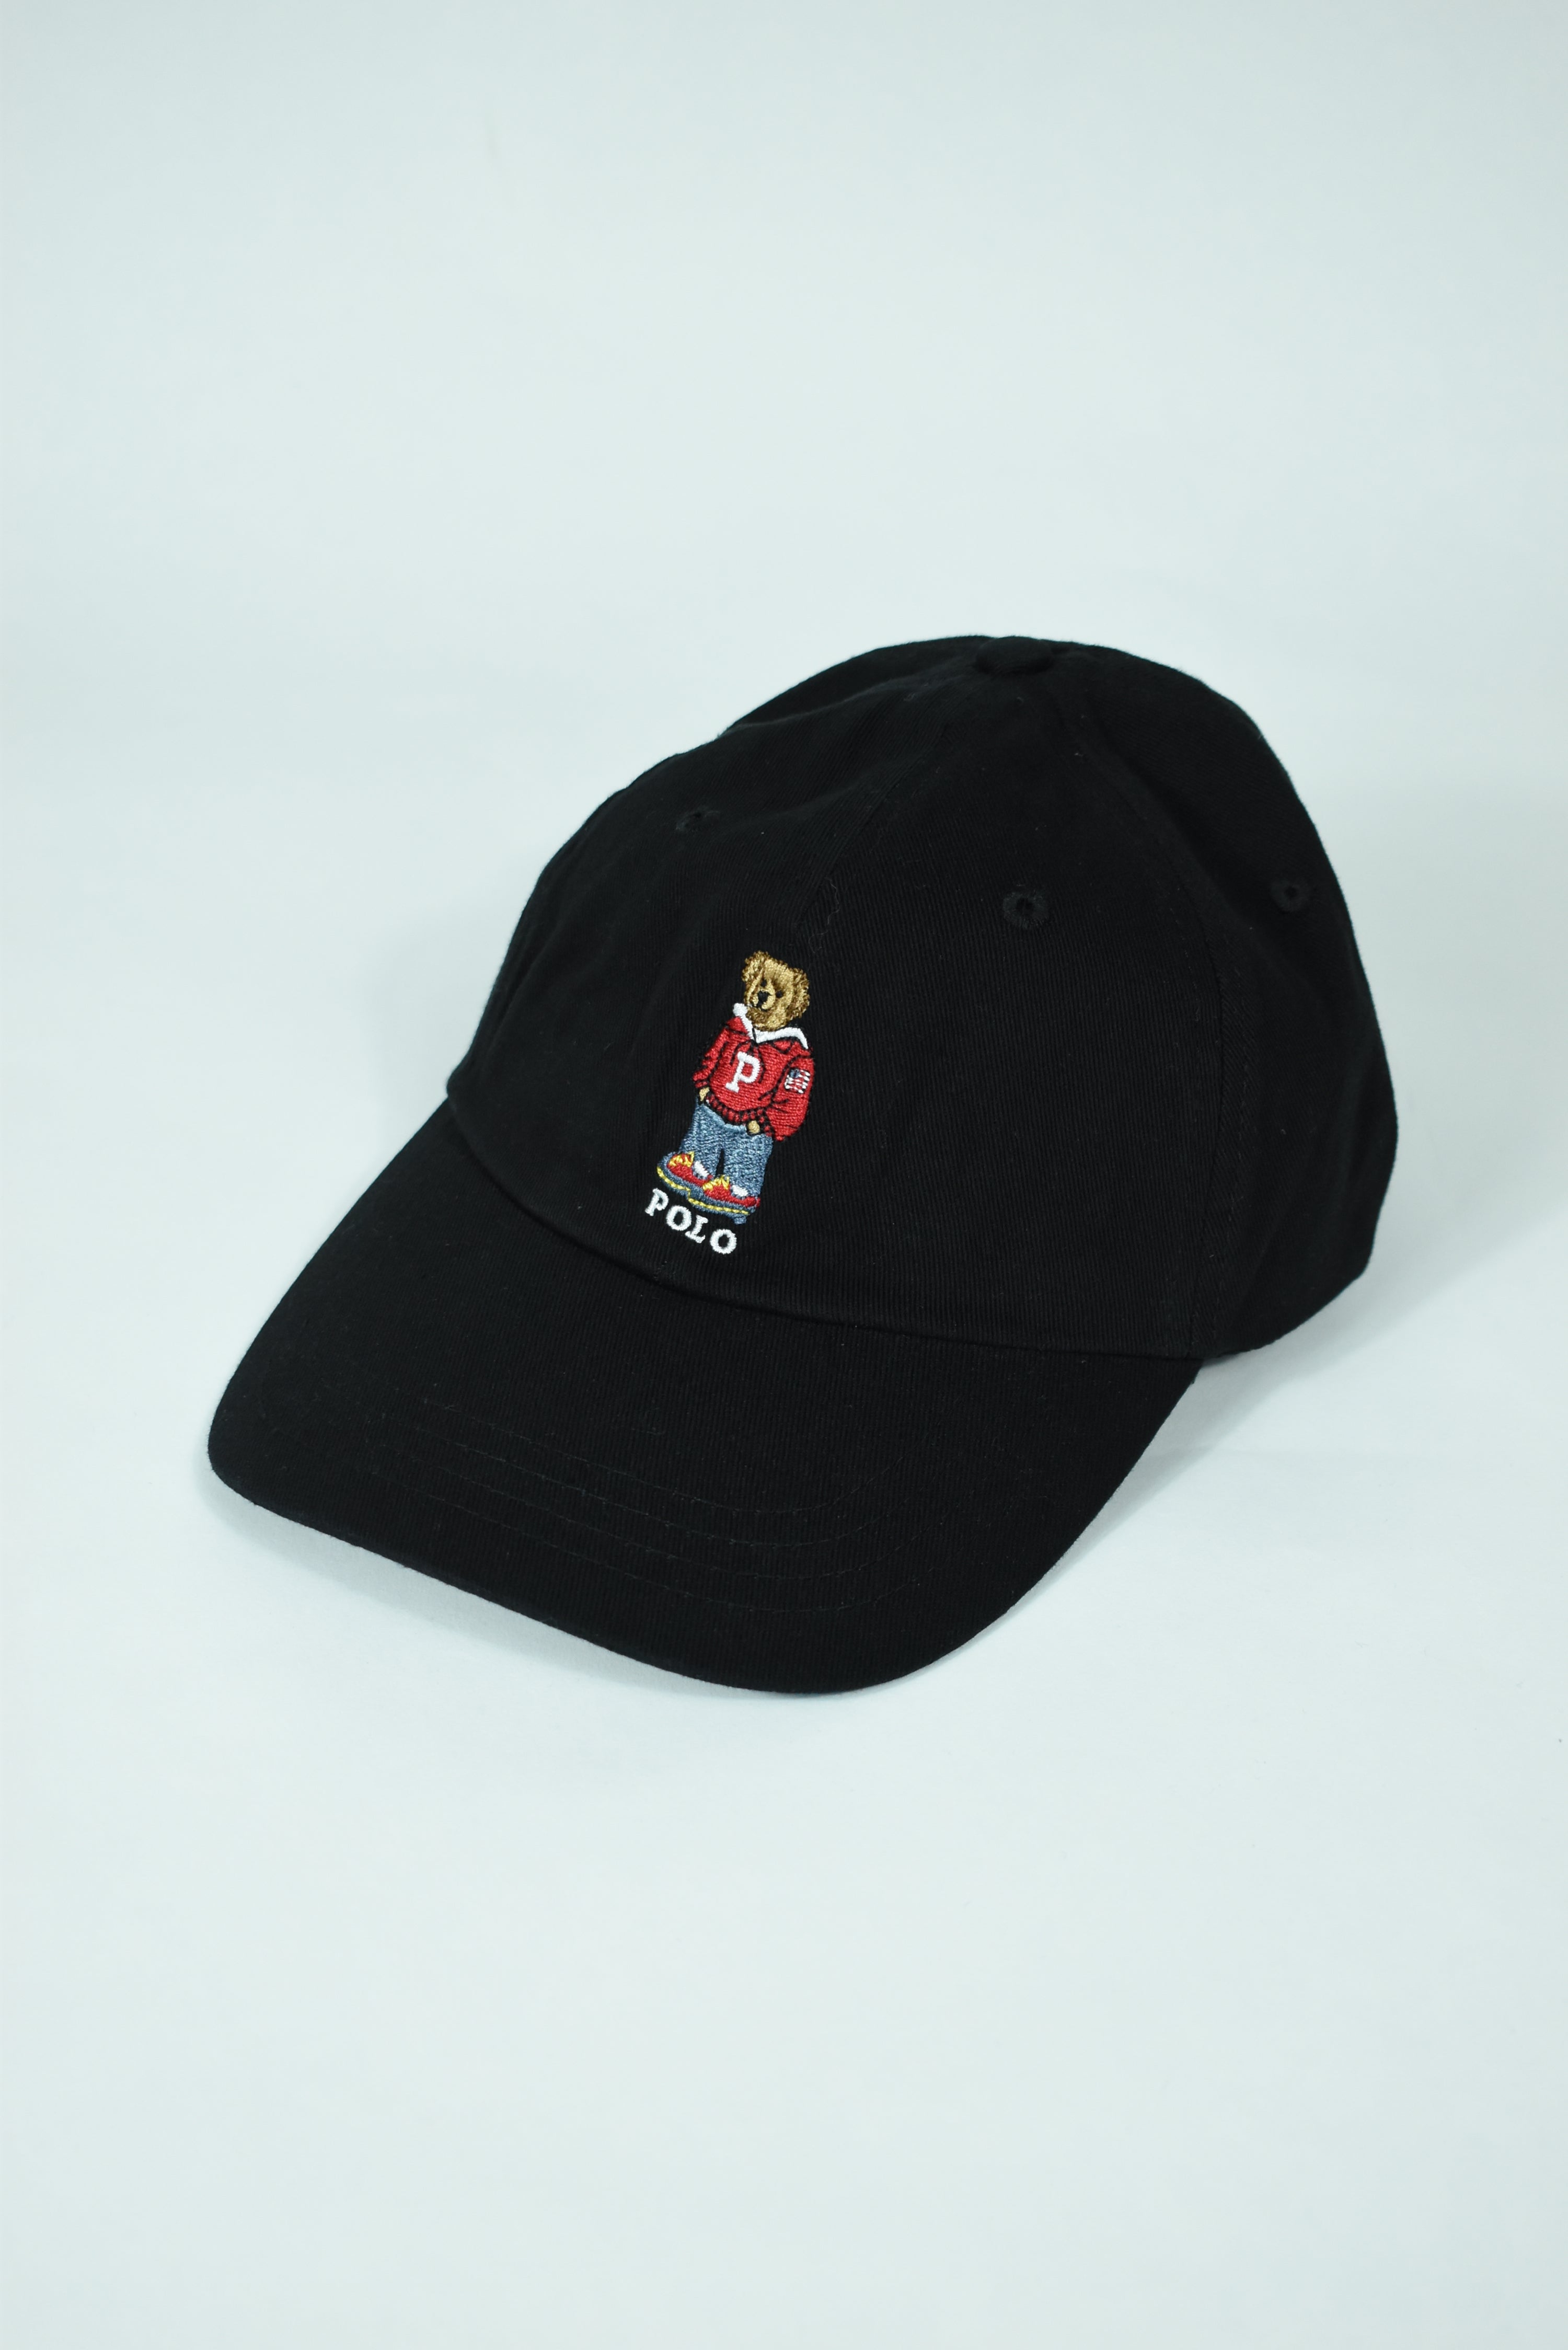 New Black RL Polo Bear Embroidery Cap